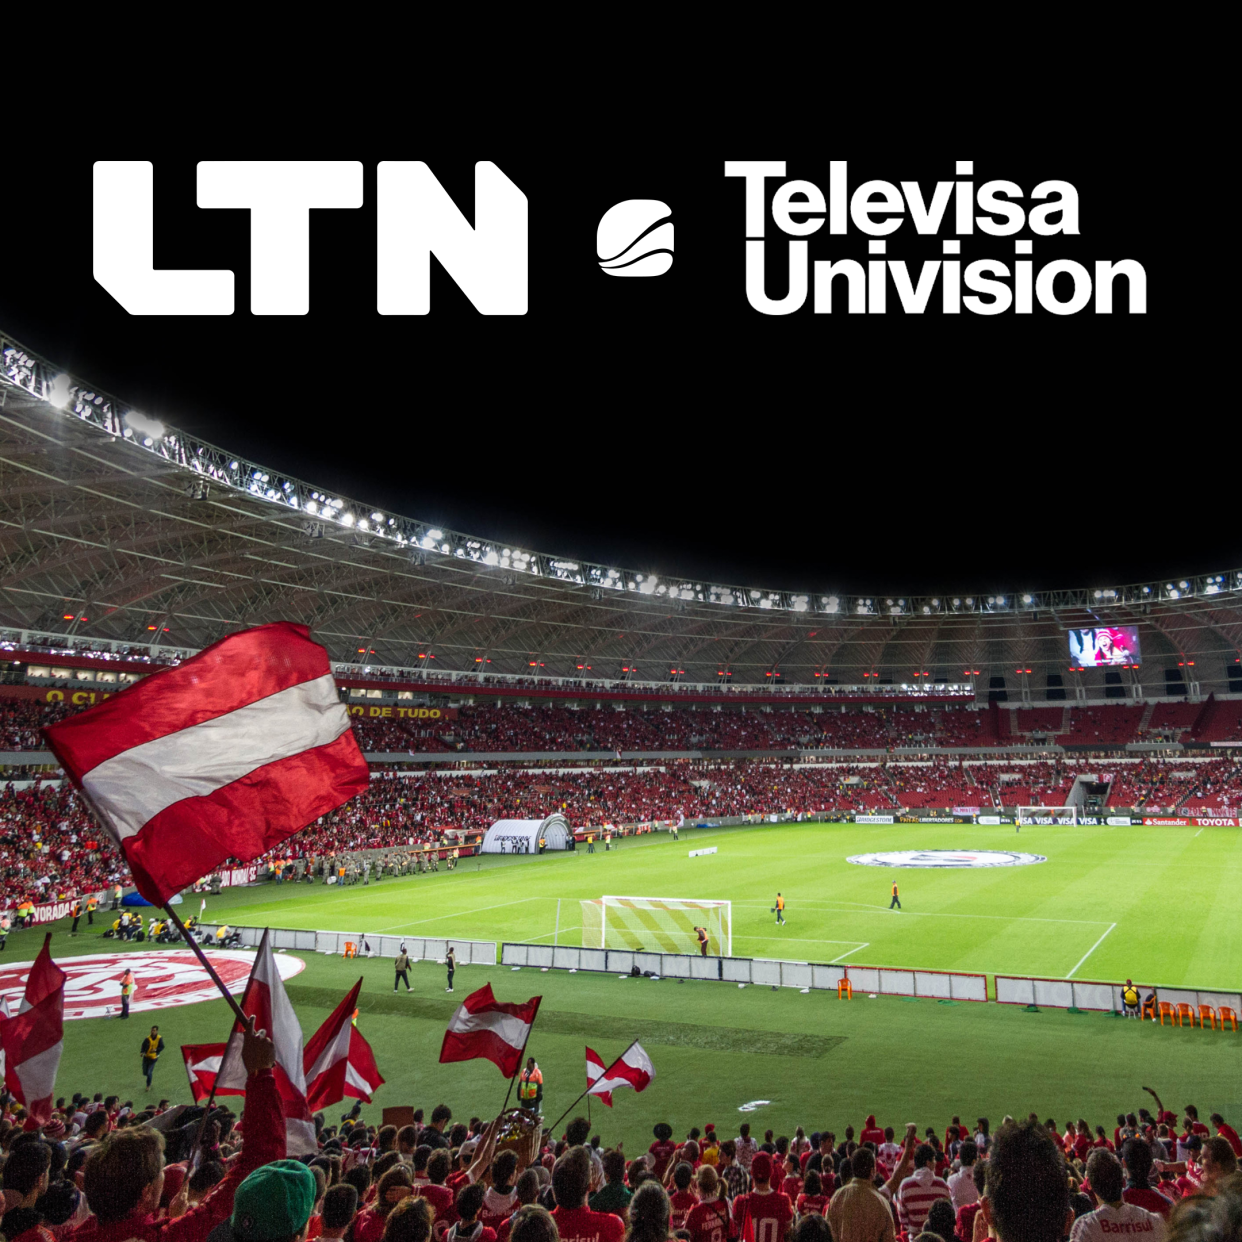  LTN and TelevisaUnivision. 